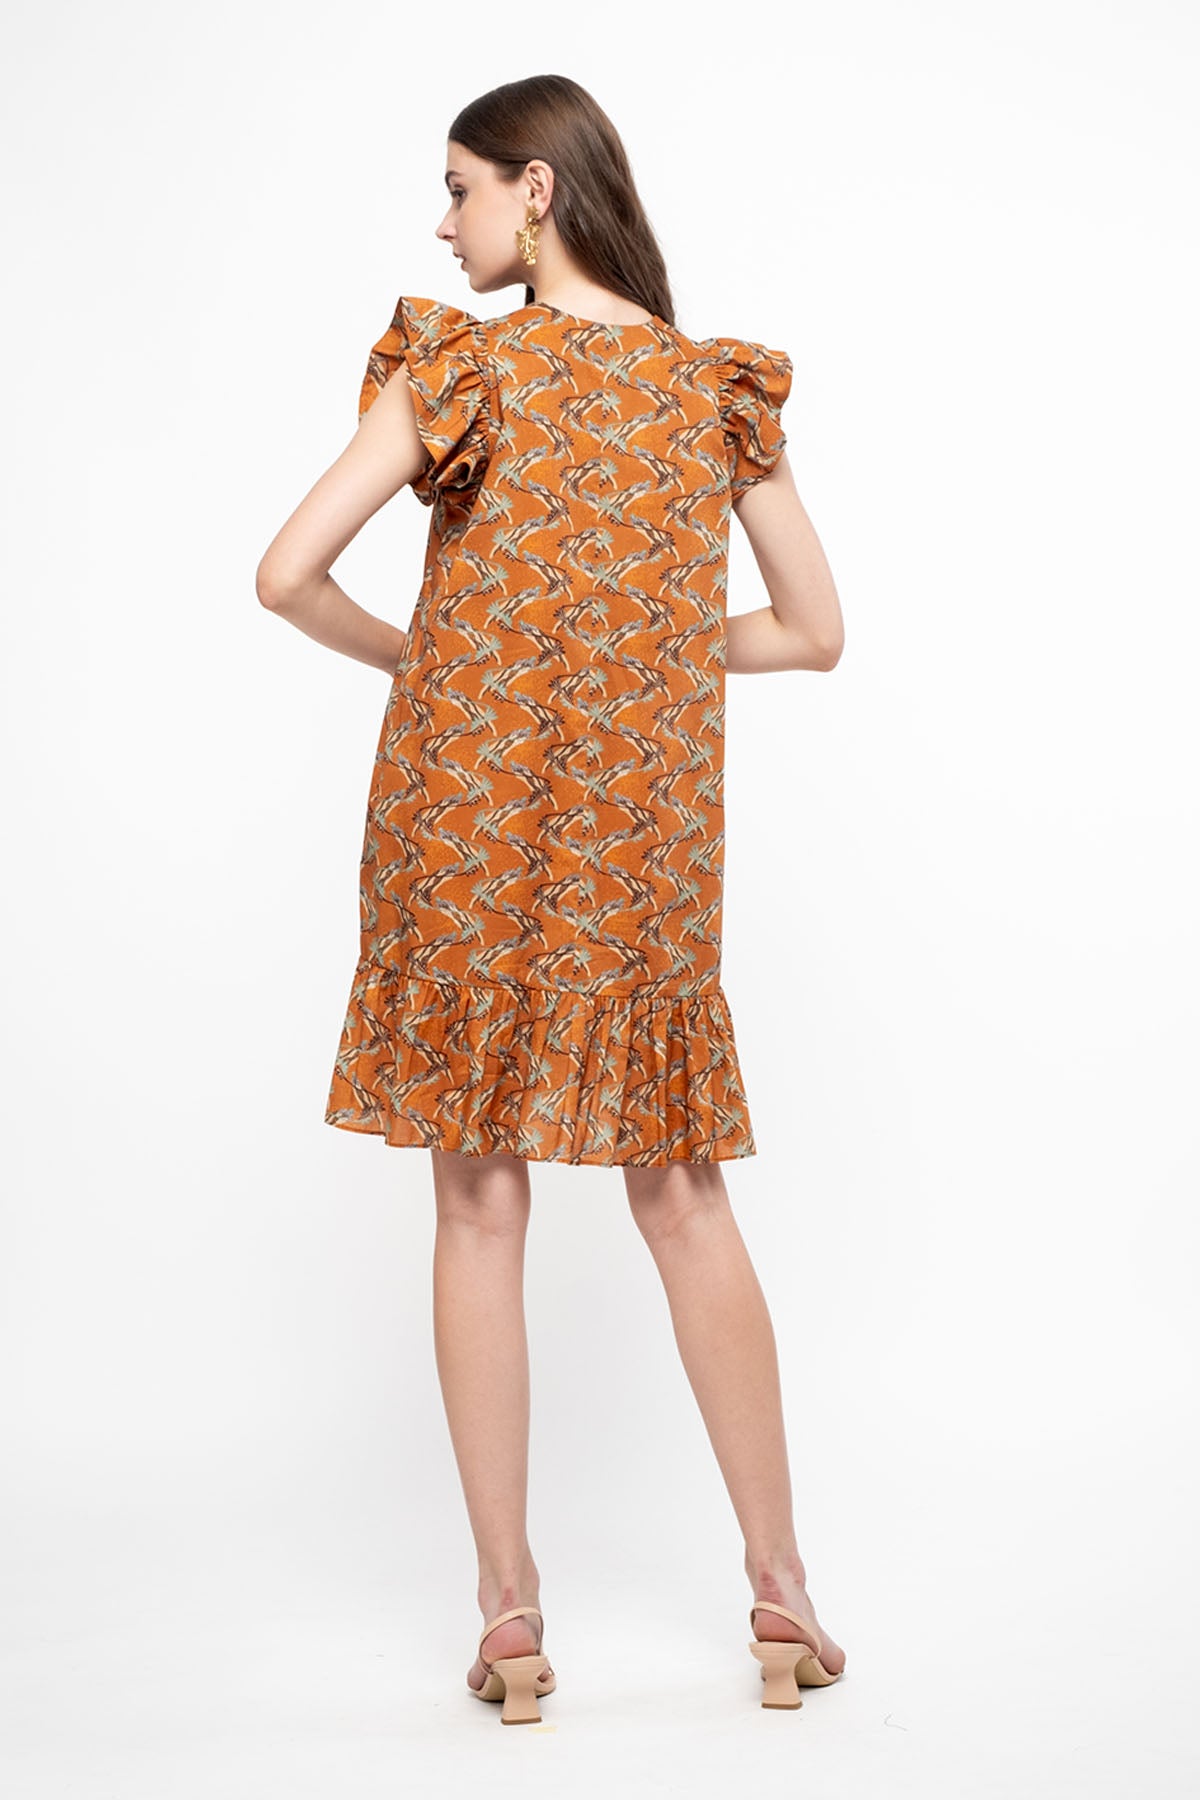 DARA Dress in Orange Tenun